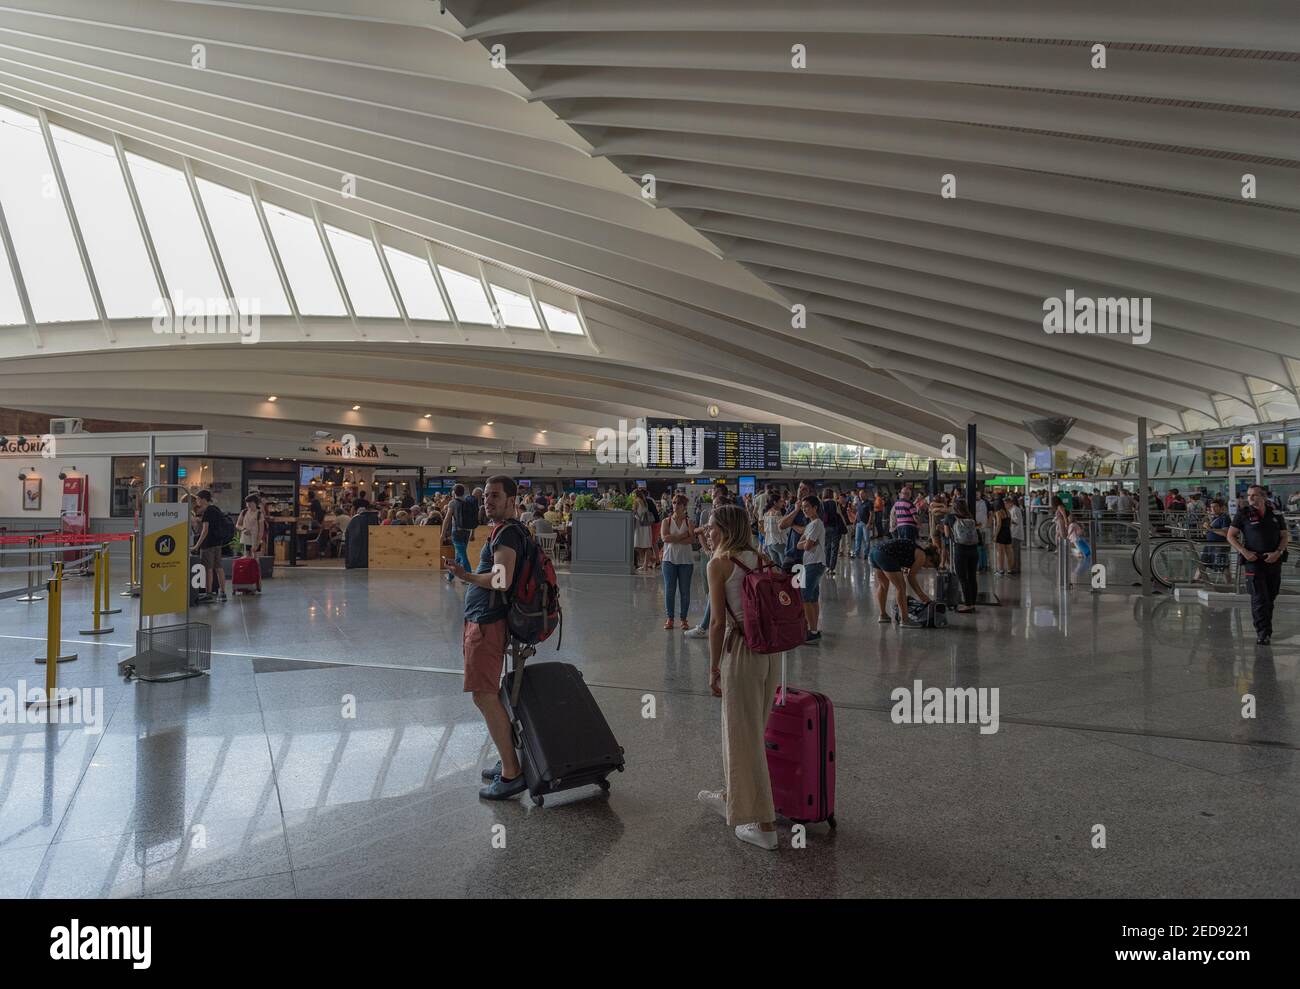 Terminal passagers à l'aéroport de Bilbao, conçu par Santiago Calatrava, Espagne Banque D'Images